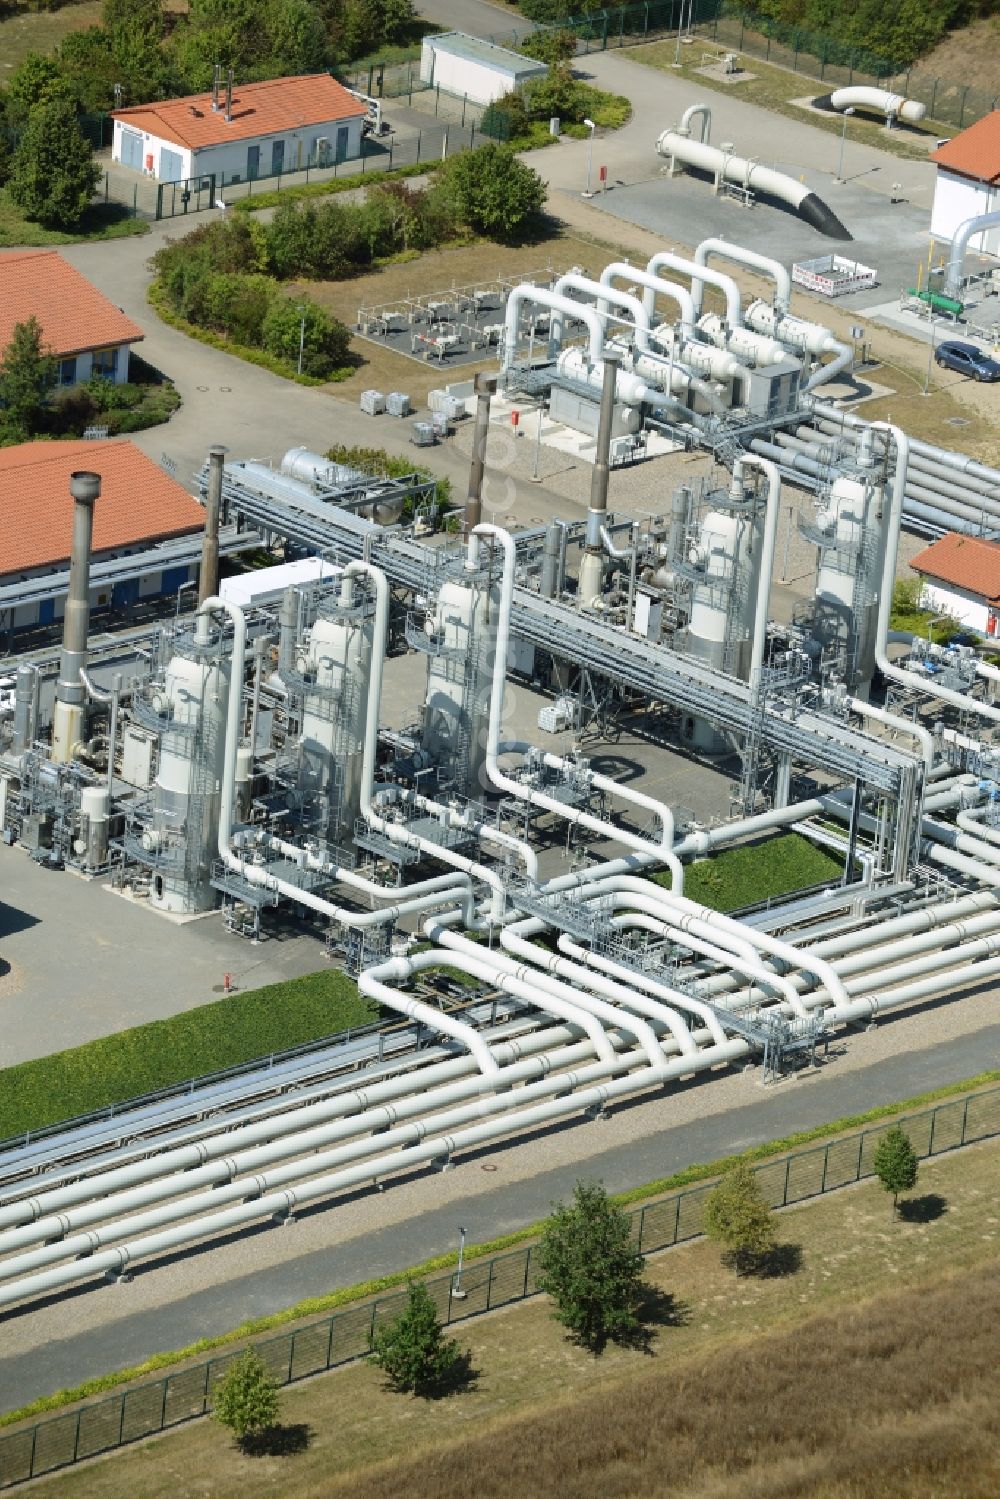 Aerial photograph Mallnow - Compressor station and pumping station for Erdgasder GASCADE Gastransport GmbH in Mallnow in Brandenburg